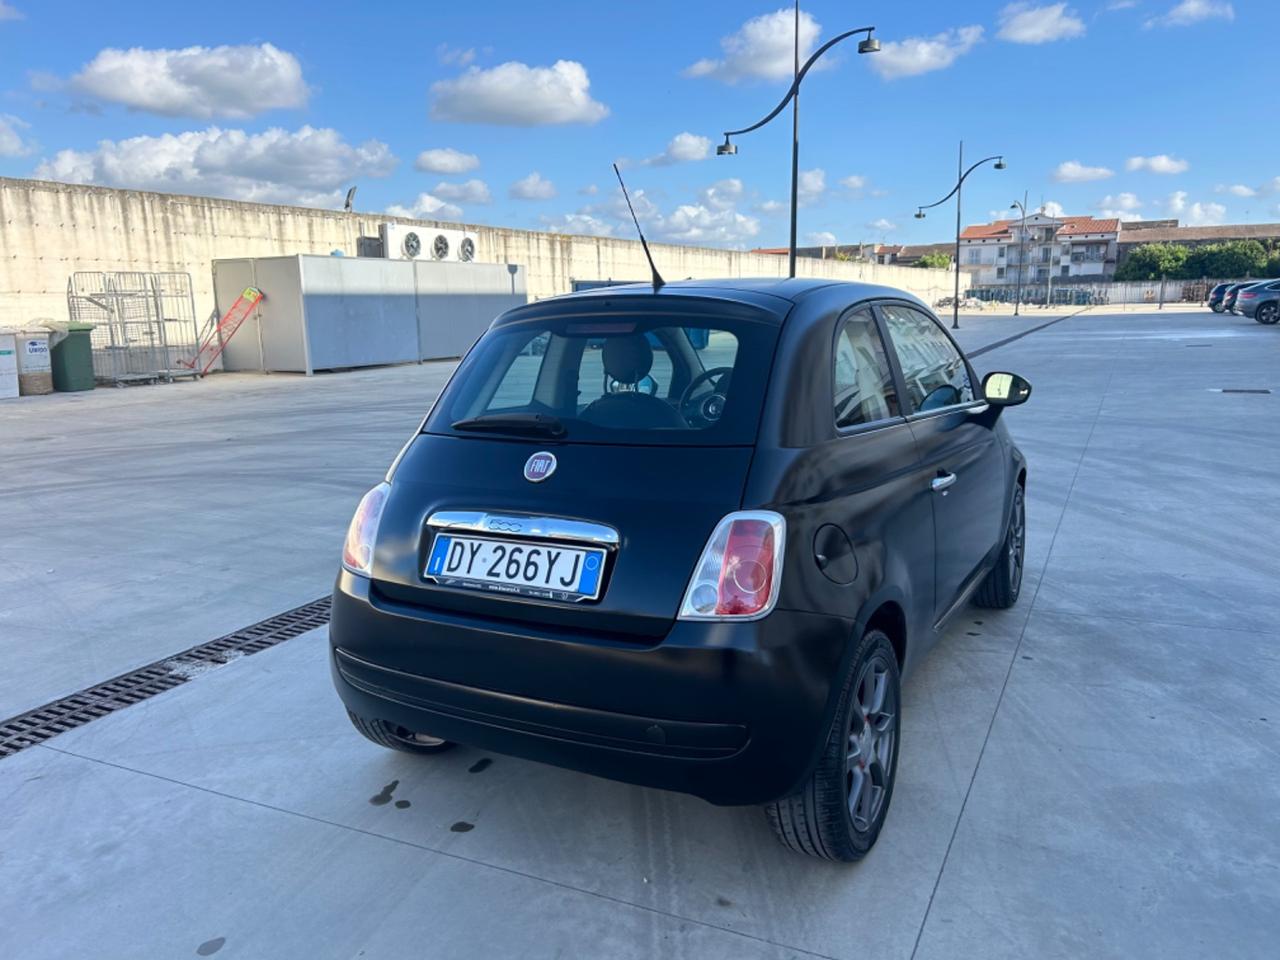 Fiat 500 1.2 Pop